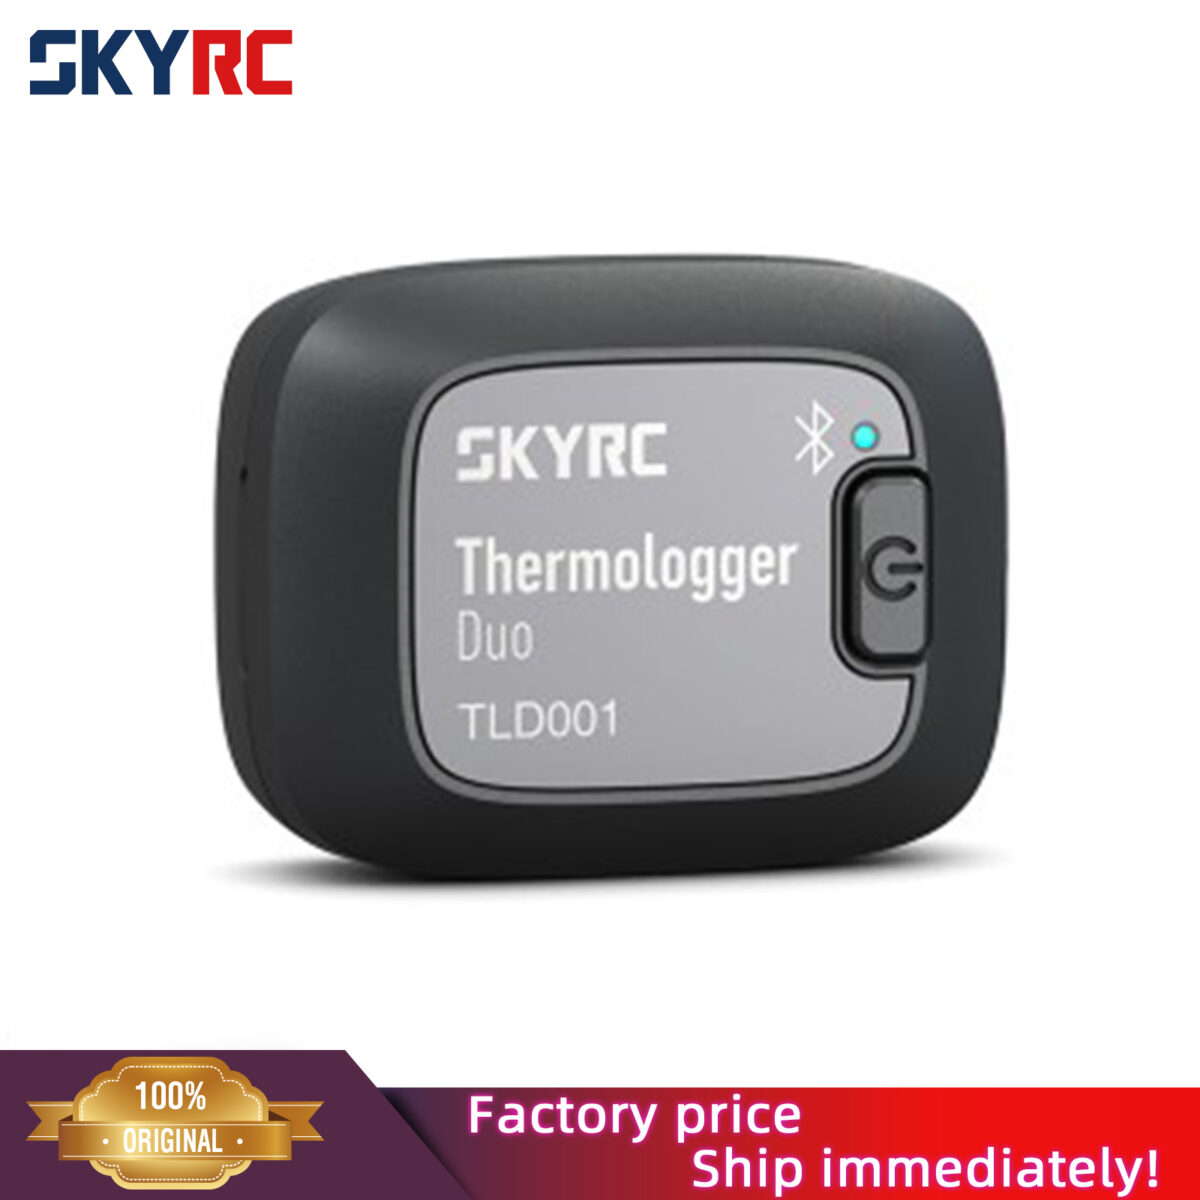 SkyRC Thermologger Duo